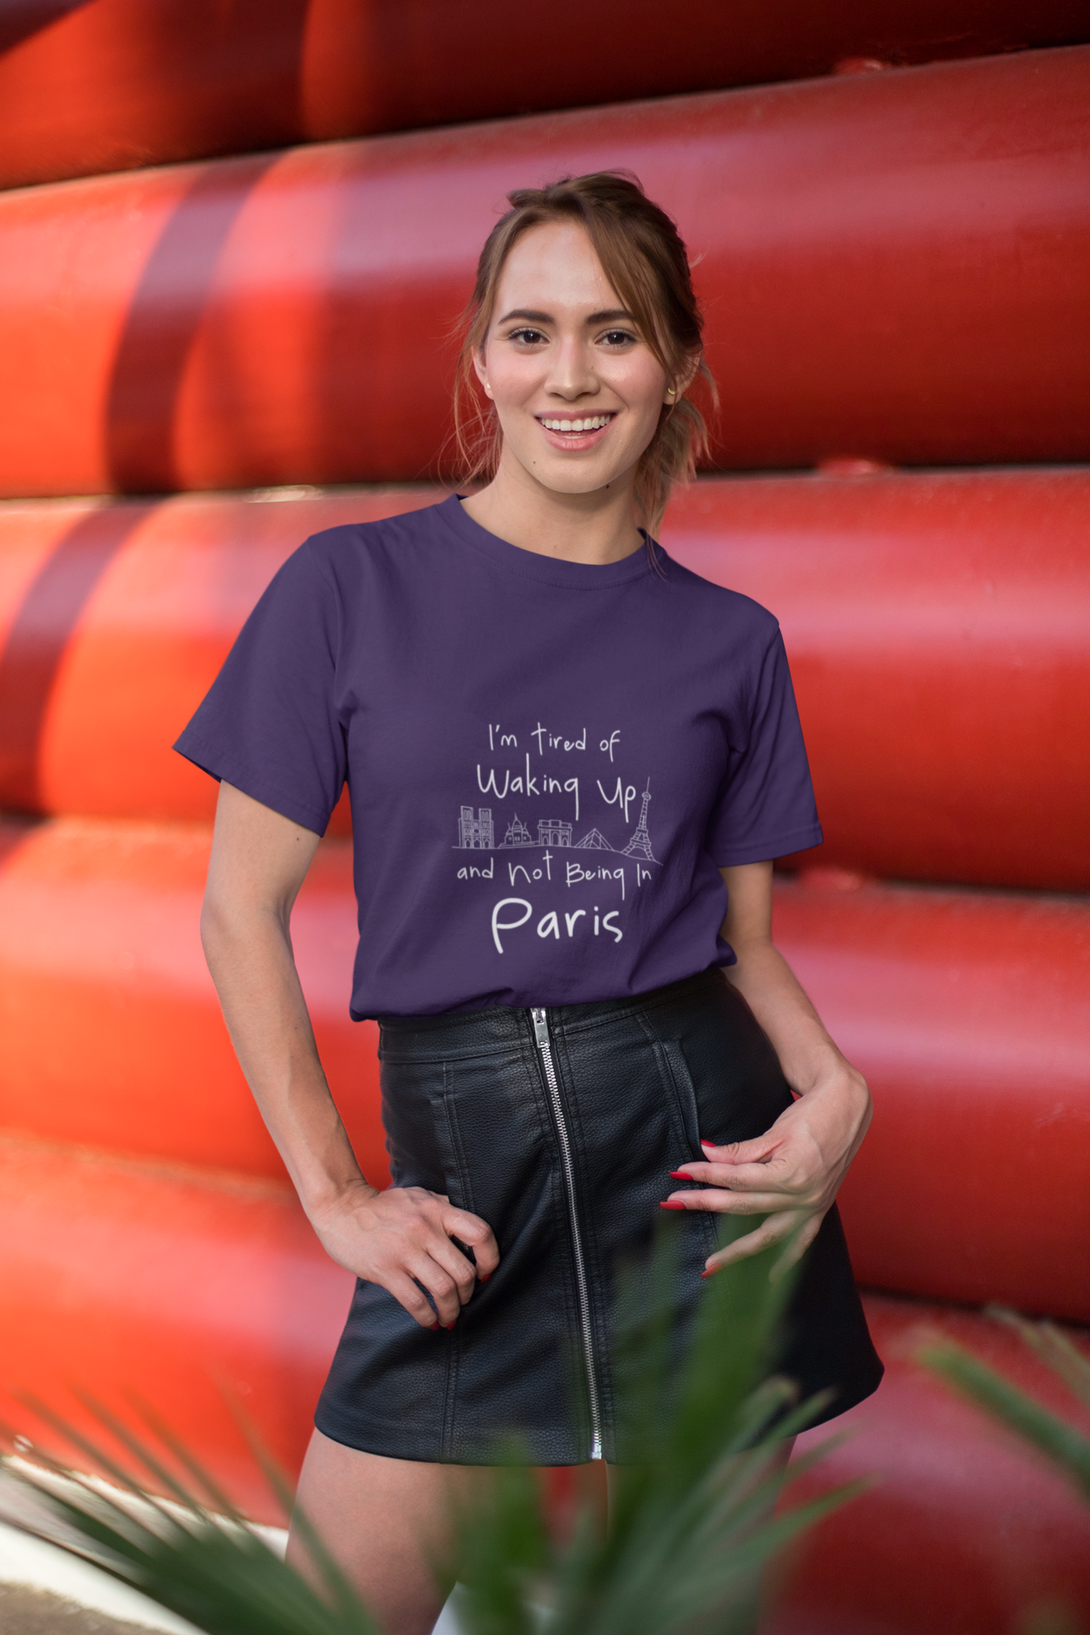 Paris Dreaming Printed T-Shirt For Women - WowWaves - 4